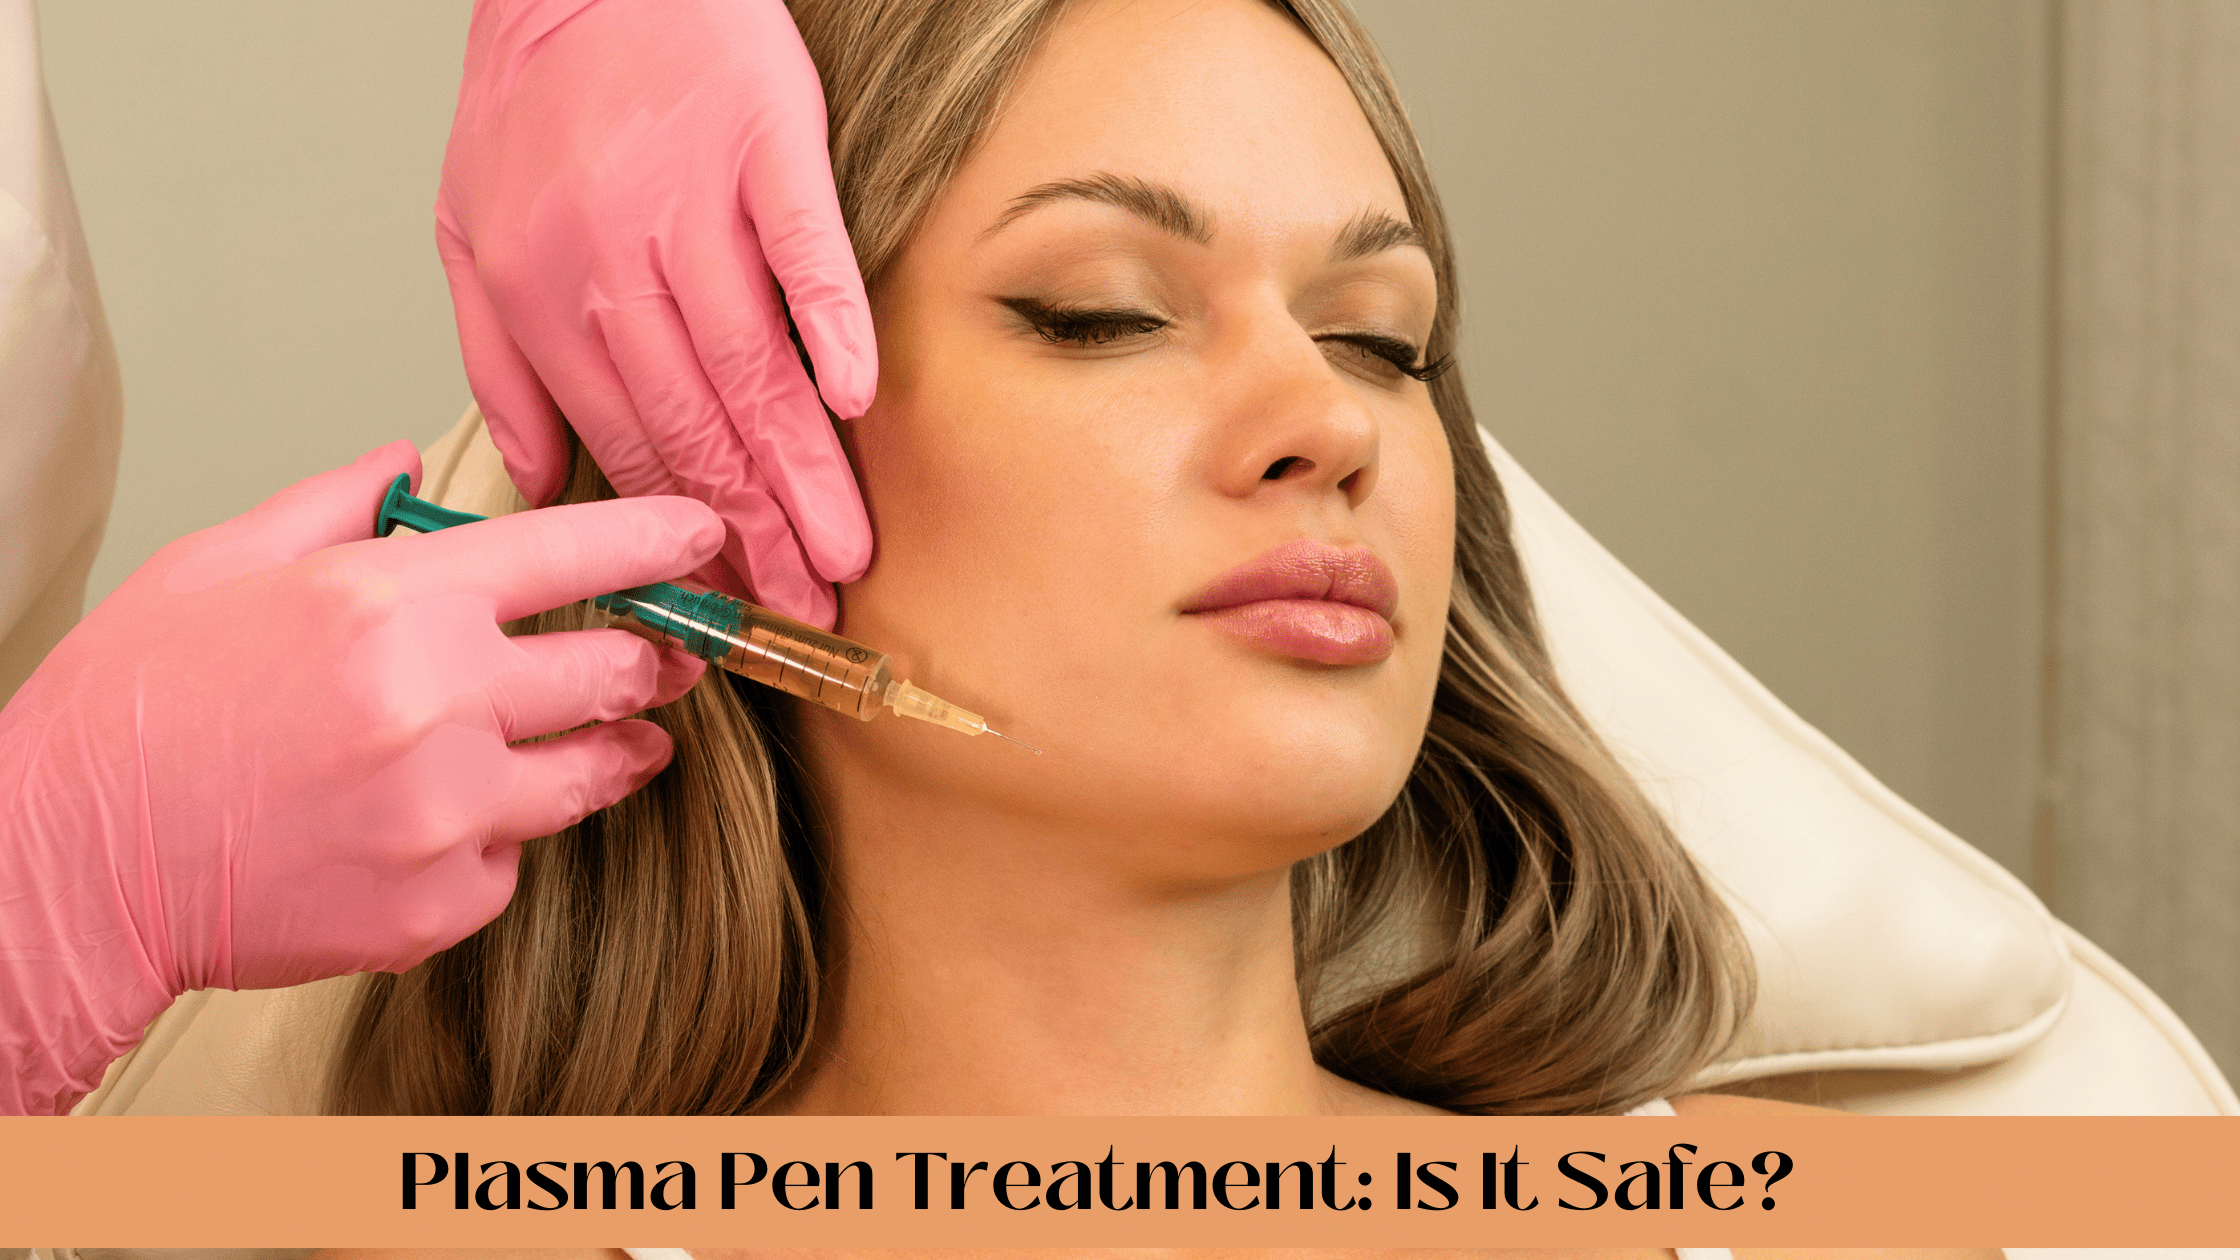 Plasma pen treatment